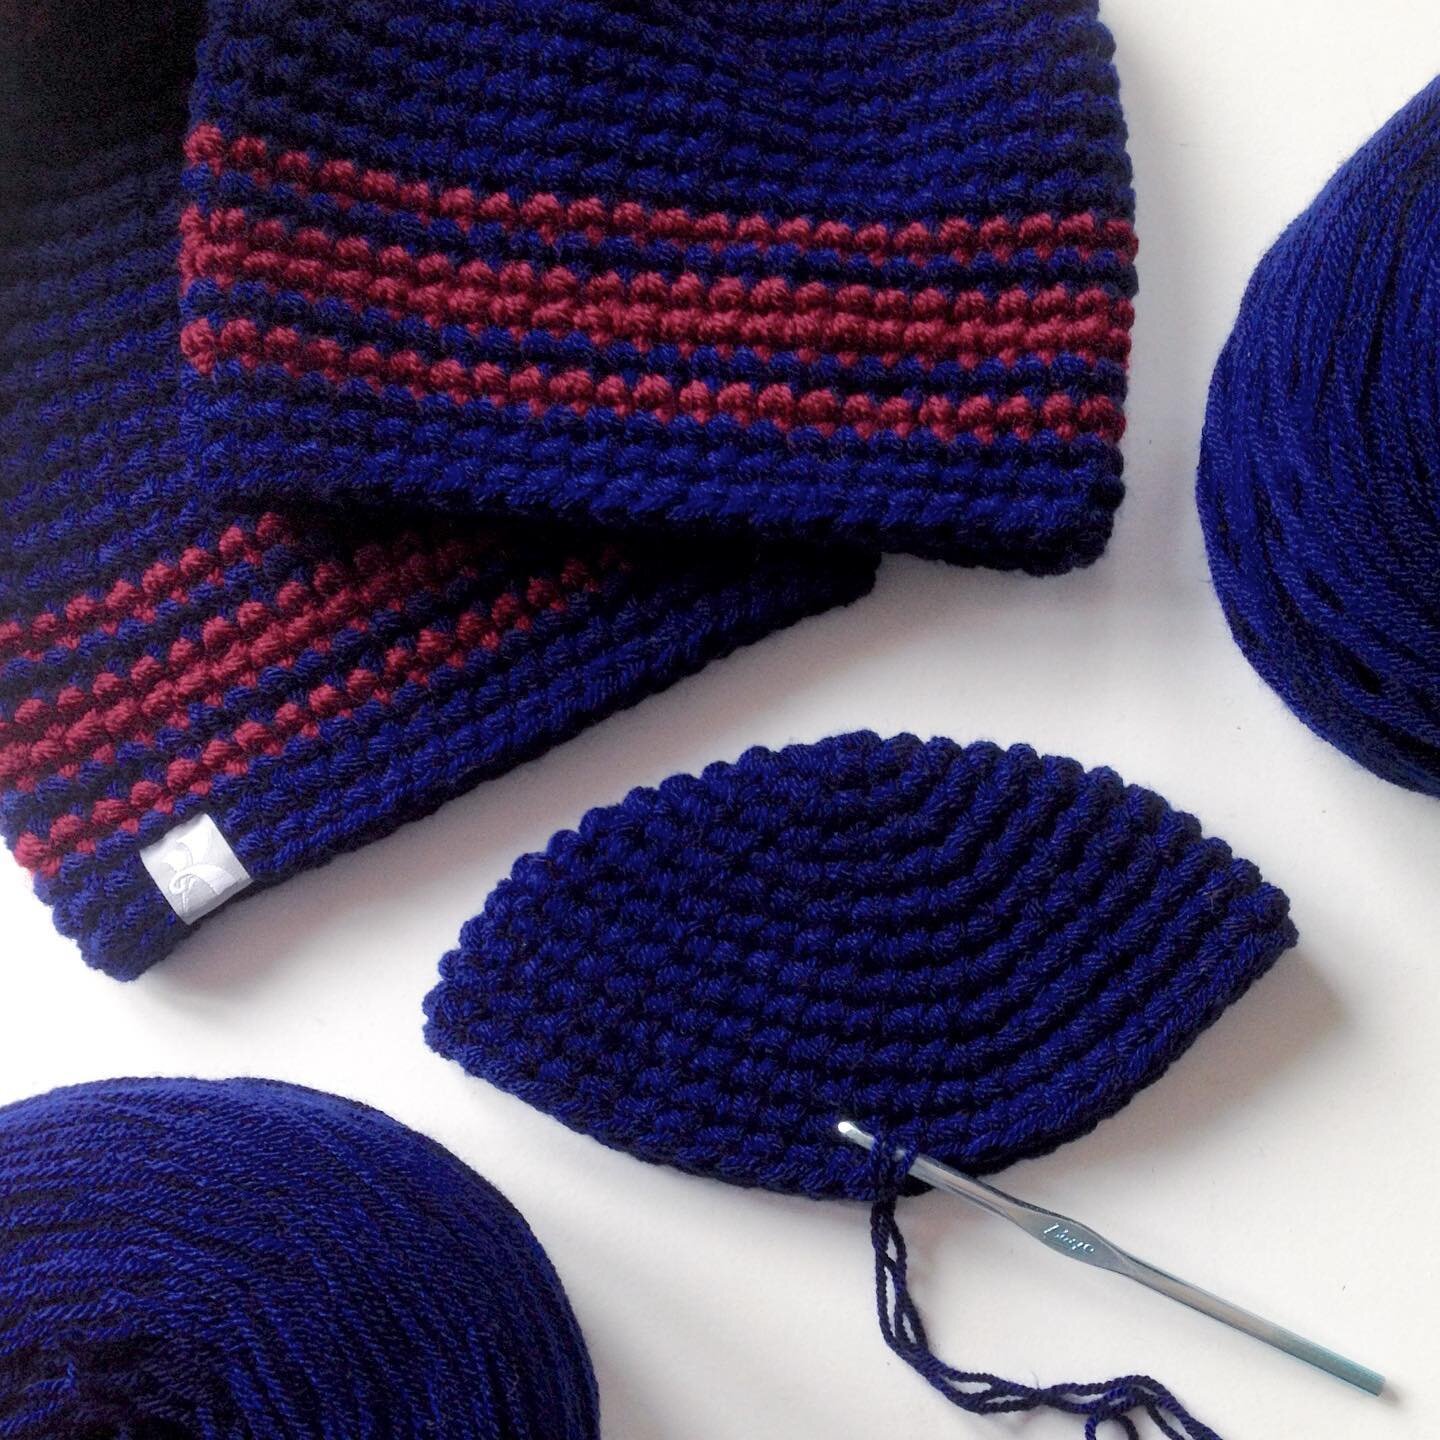 The first of many progress pics to come. 😬 

_____________________✍
#designyourown #progress #workinprogress #custombeanies #custom #beanies 
#handmade #crochet #winterbeanies#pompom #bobble #skibeanie #maker#crochetgirlgang #ilovecrochet#snowboardb